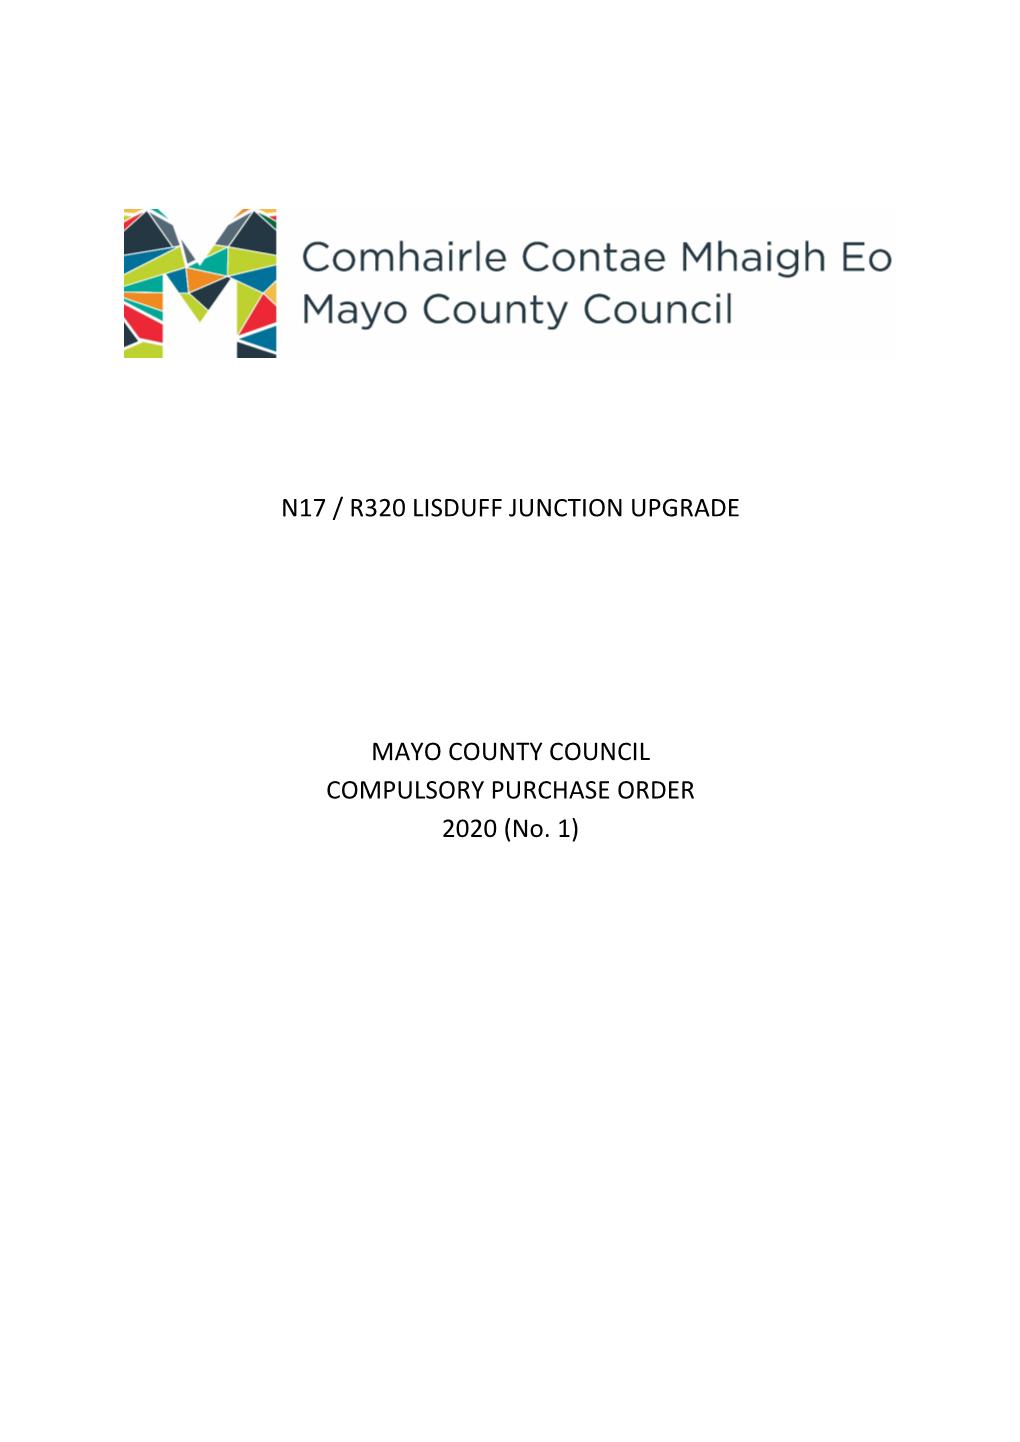 N17 / R320 Lisduff Junction Upgrade Mayo County